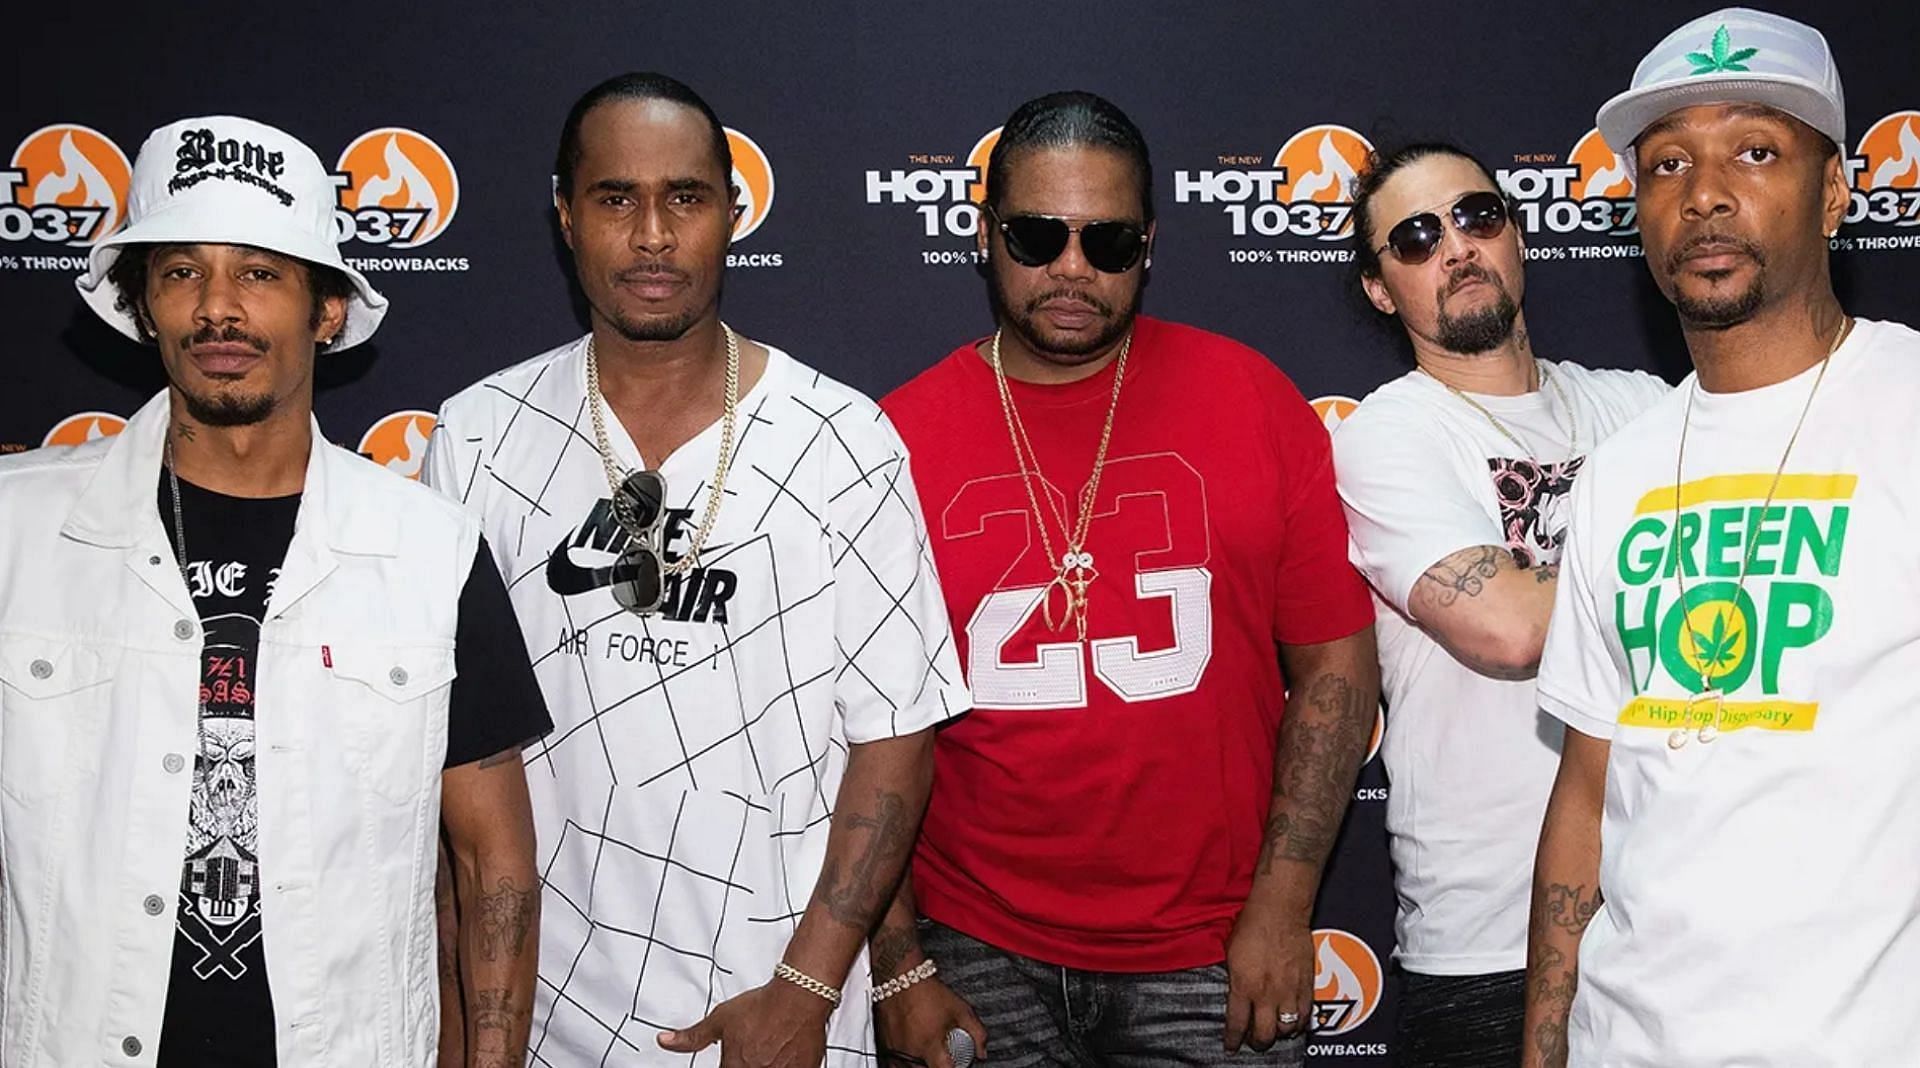 Bone Thugs-N-Harmony had a huge influence on LeBron James growing up.